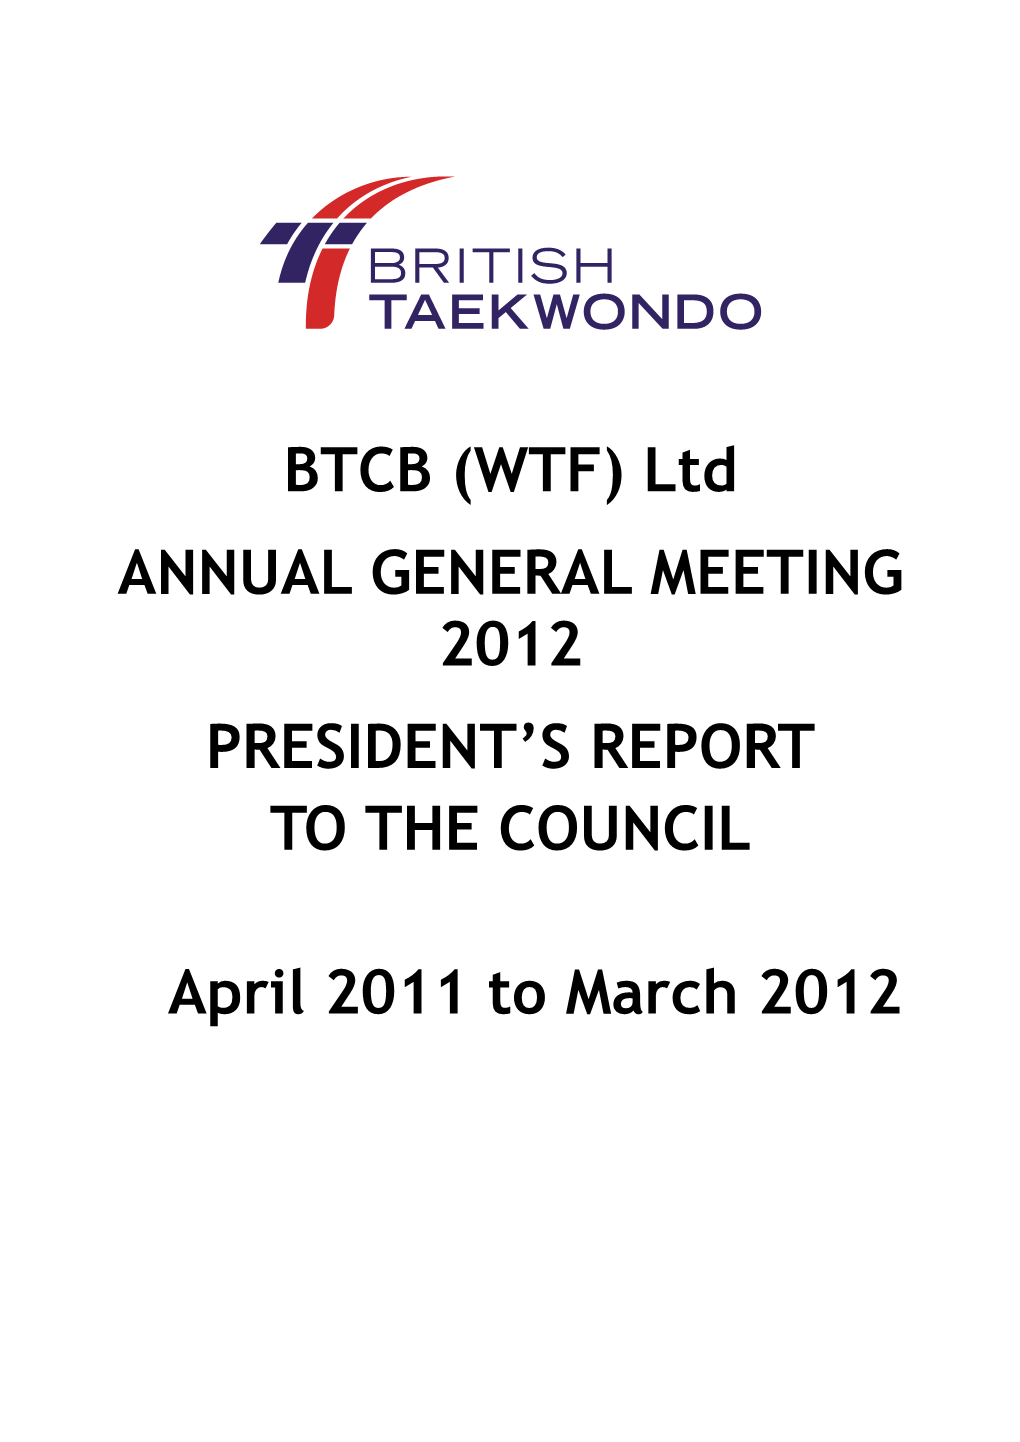 BTCB Annual General Meeting 22 July 2007